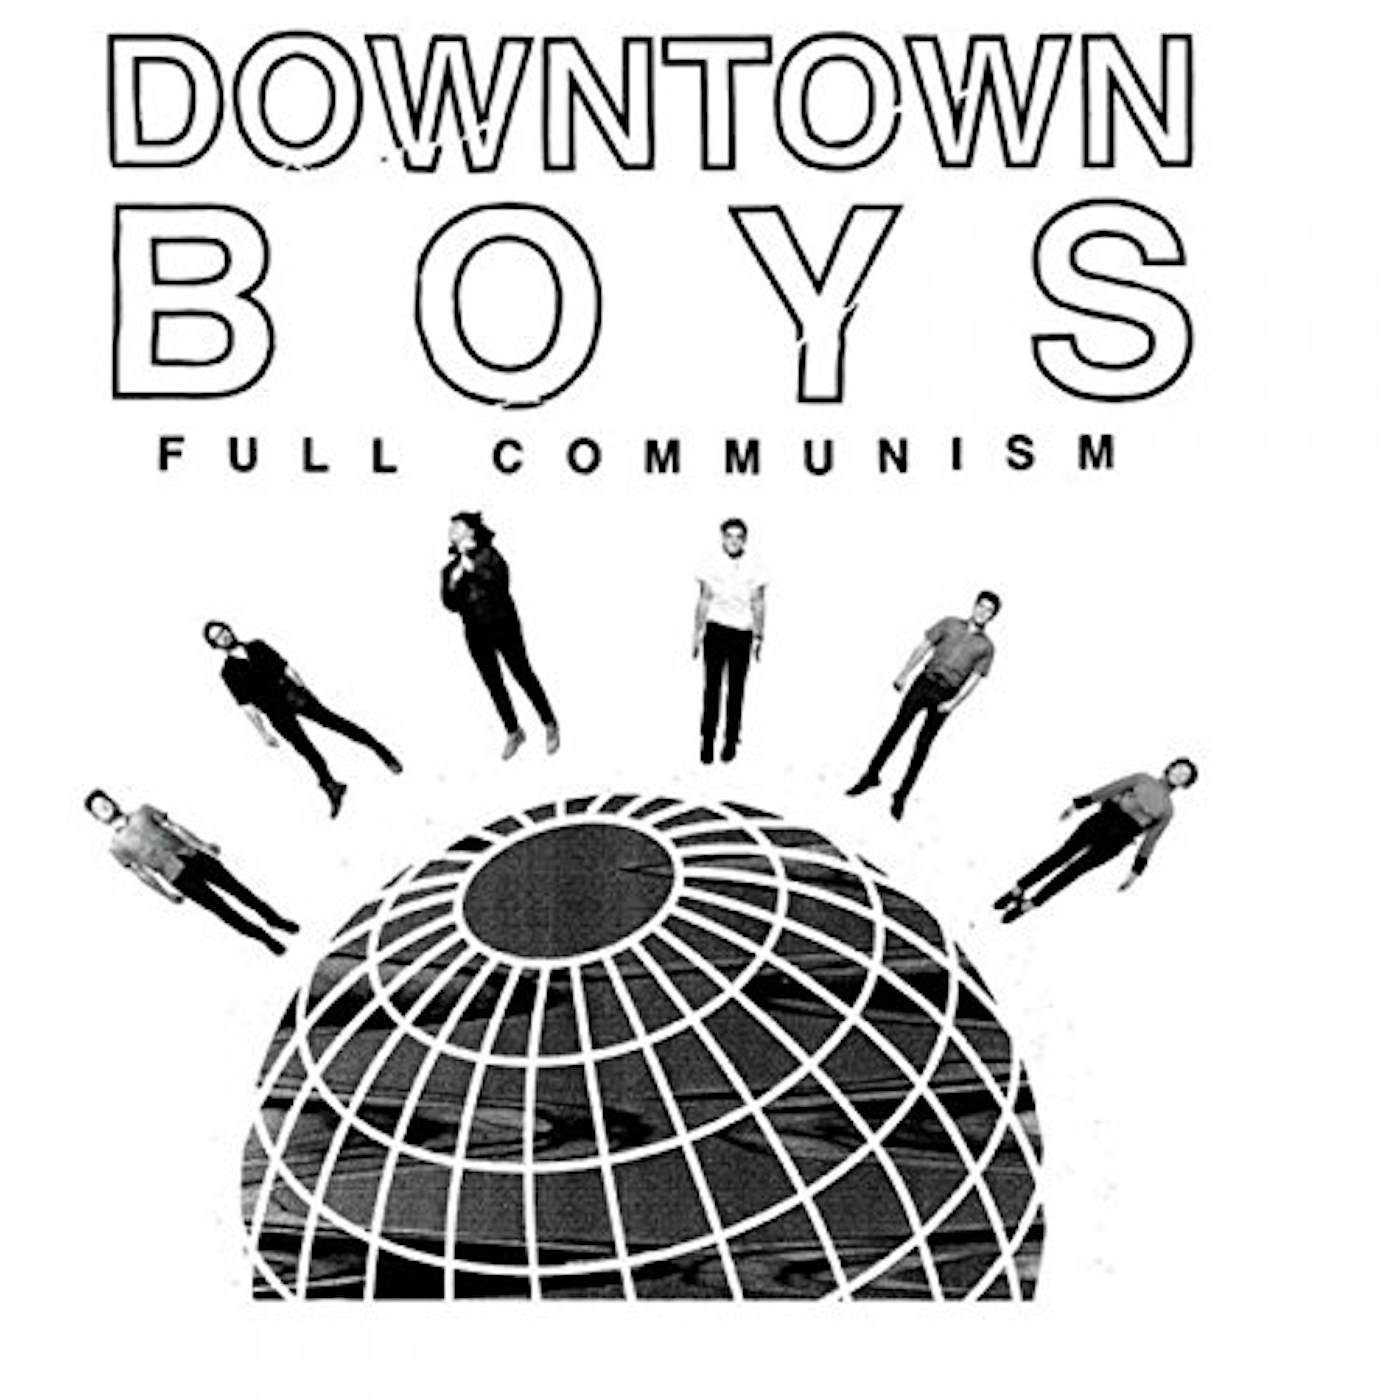 Downtown Boys FULL COMMUNISM CD